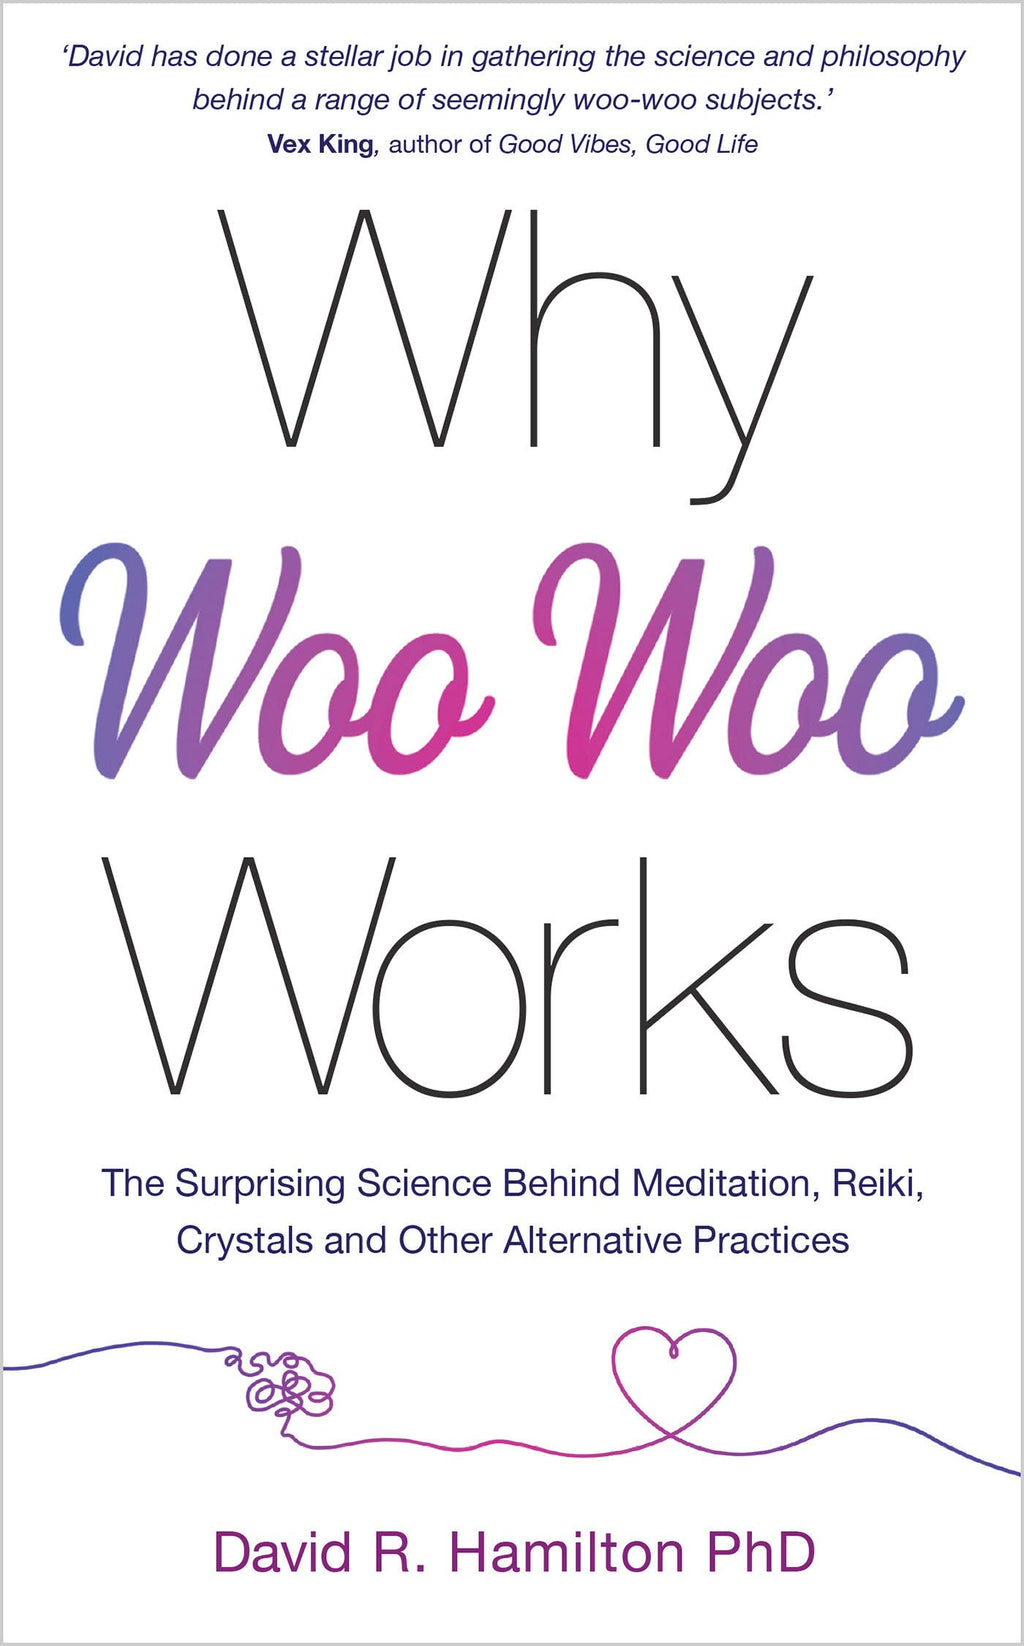 Why Woo-Woo Works - Lighten Up Shop